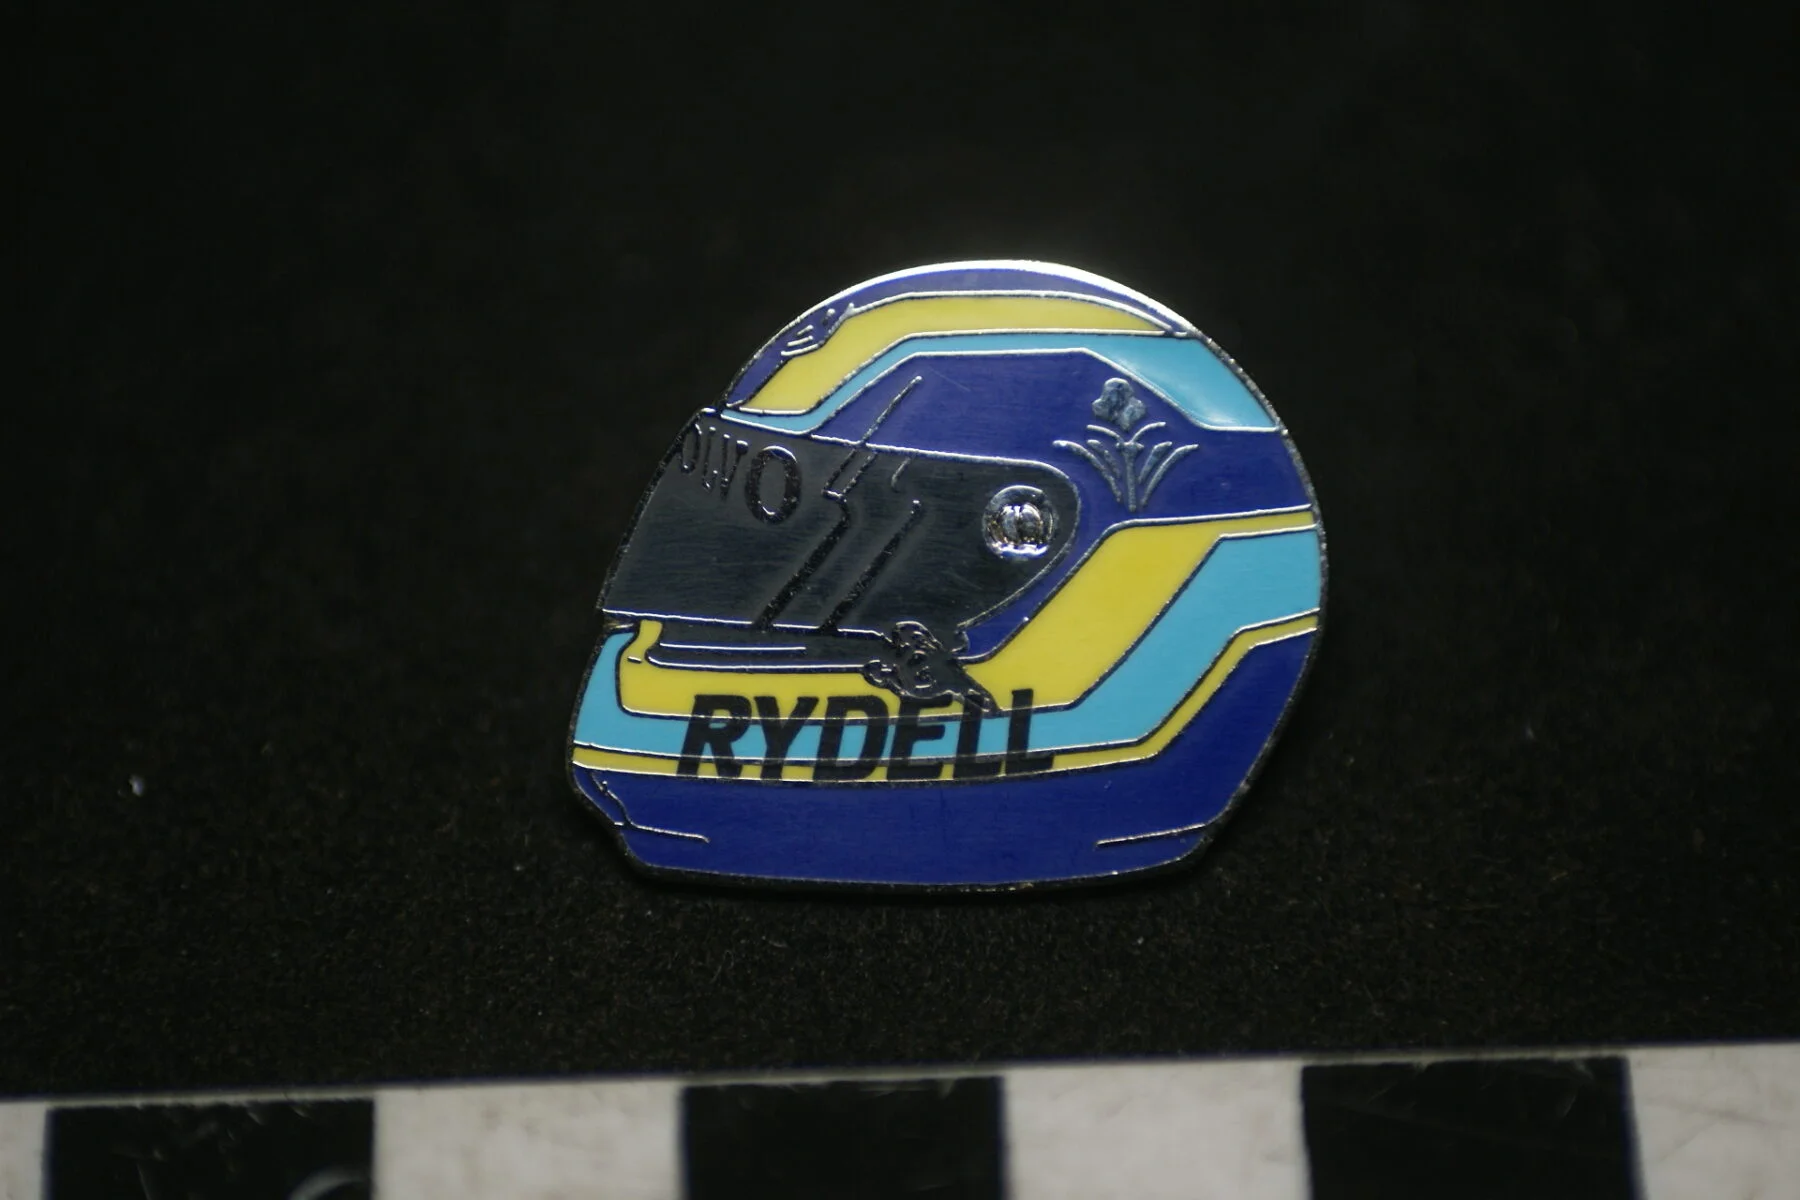 DSC01997 pin Volvo helm Rydell mint-3b6d6de6